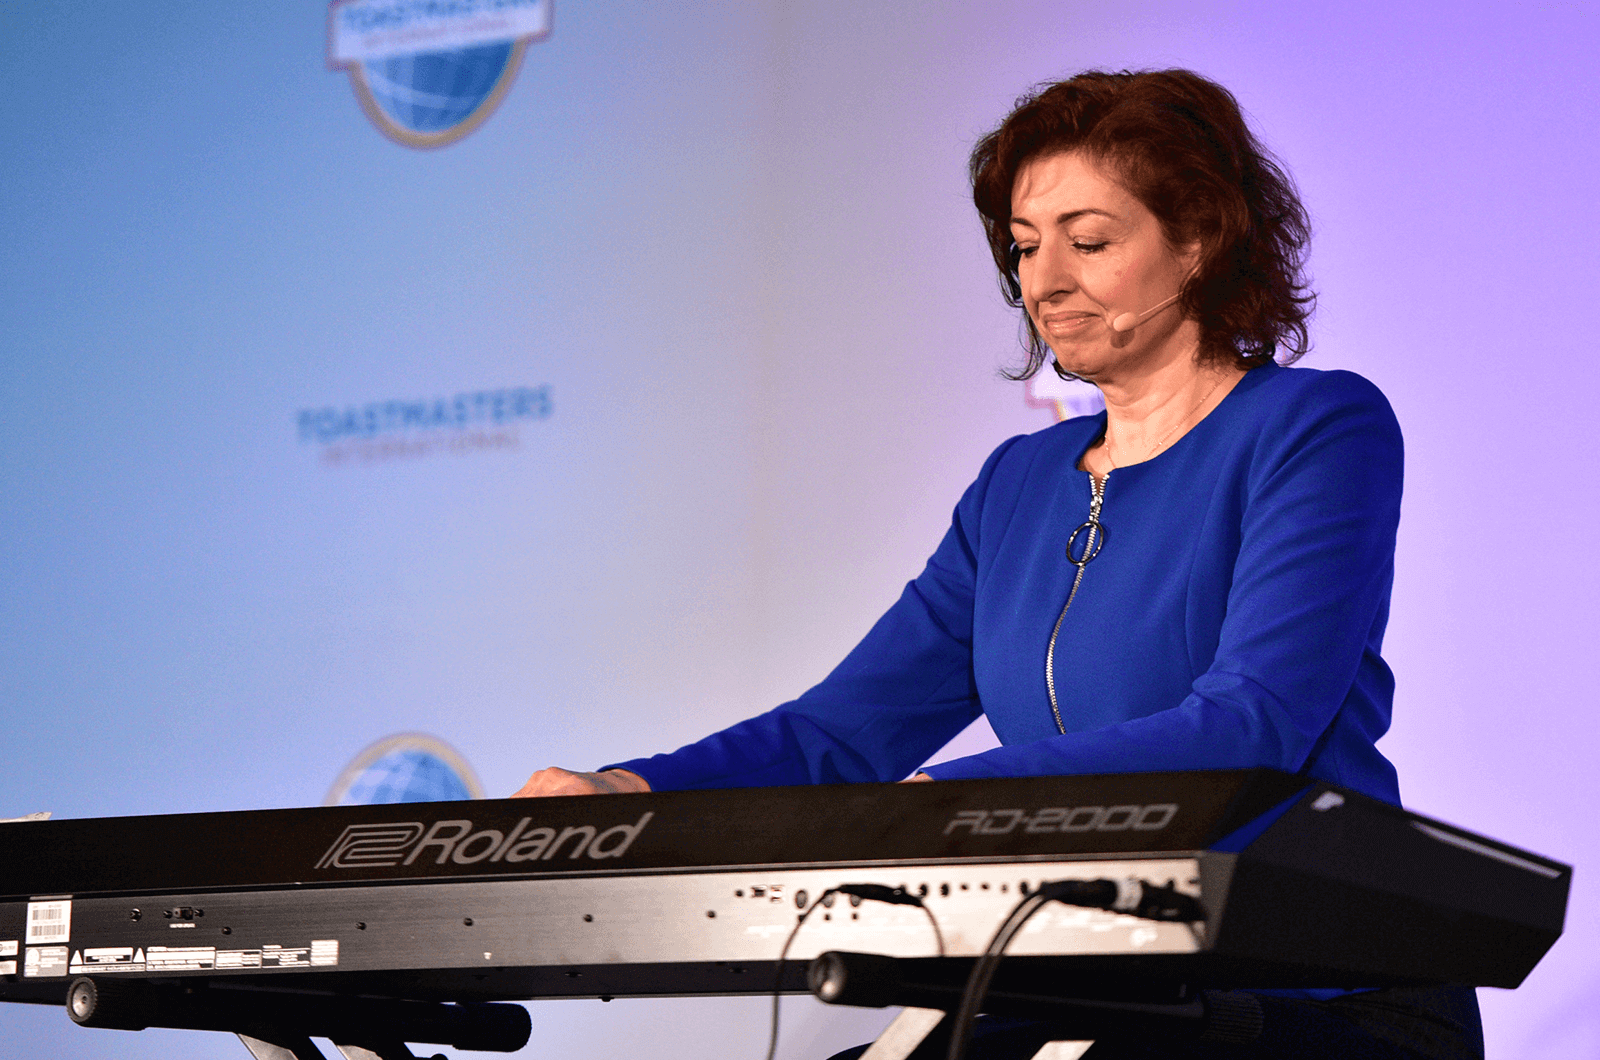 Yelena Balabanova onstage in blue dress